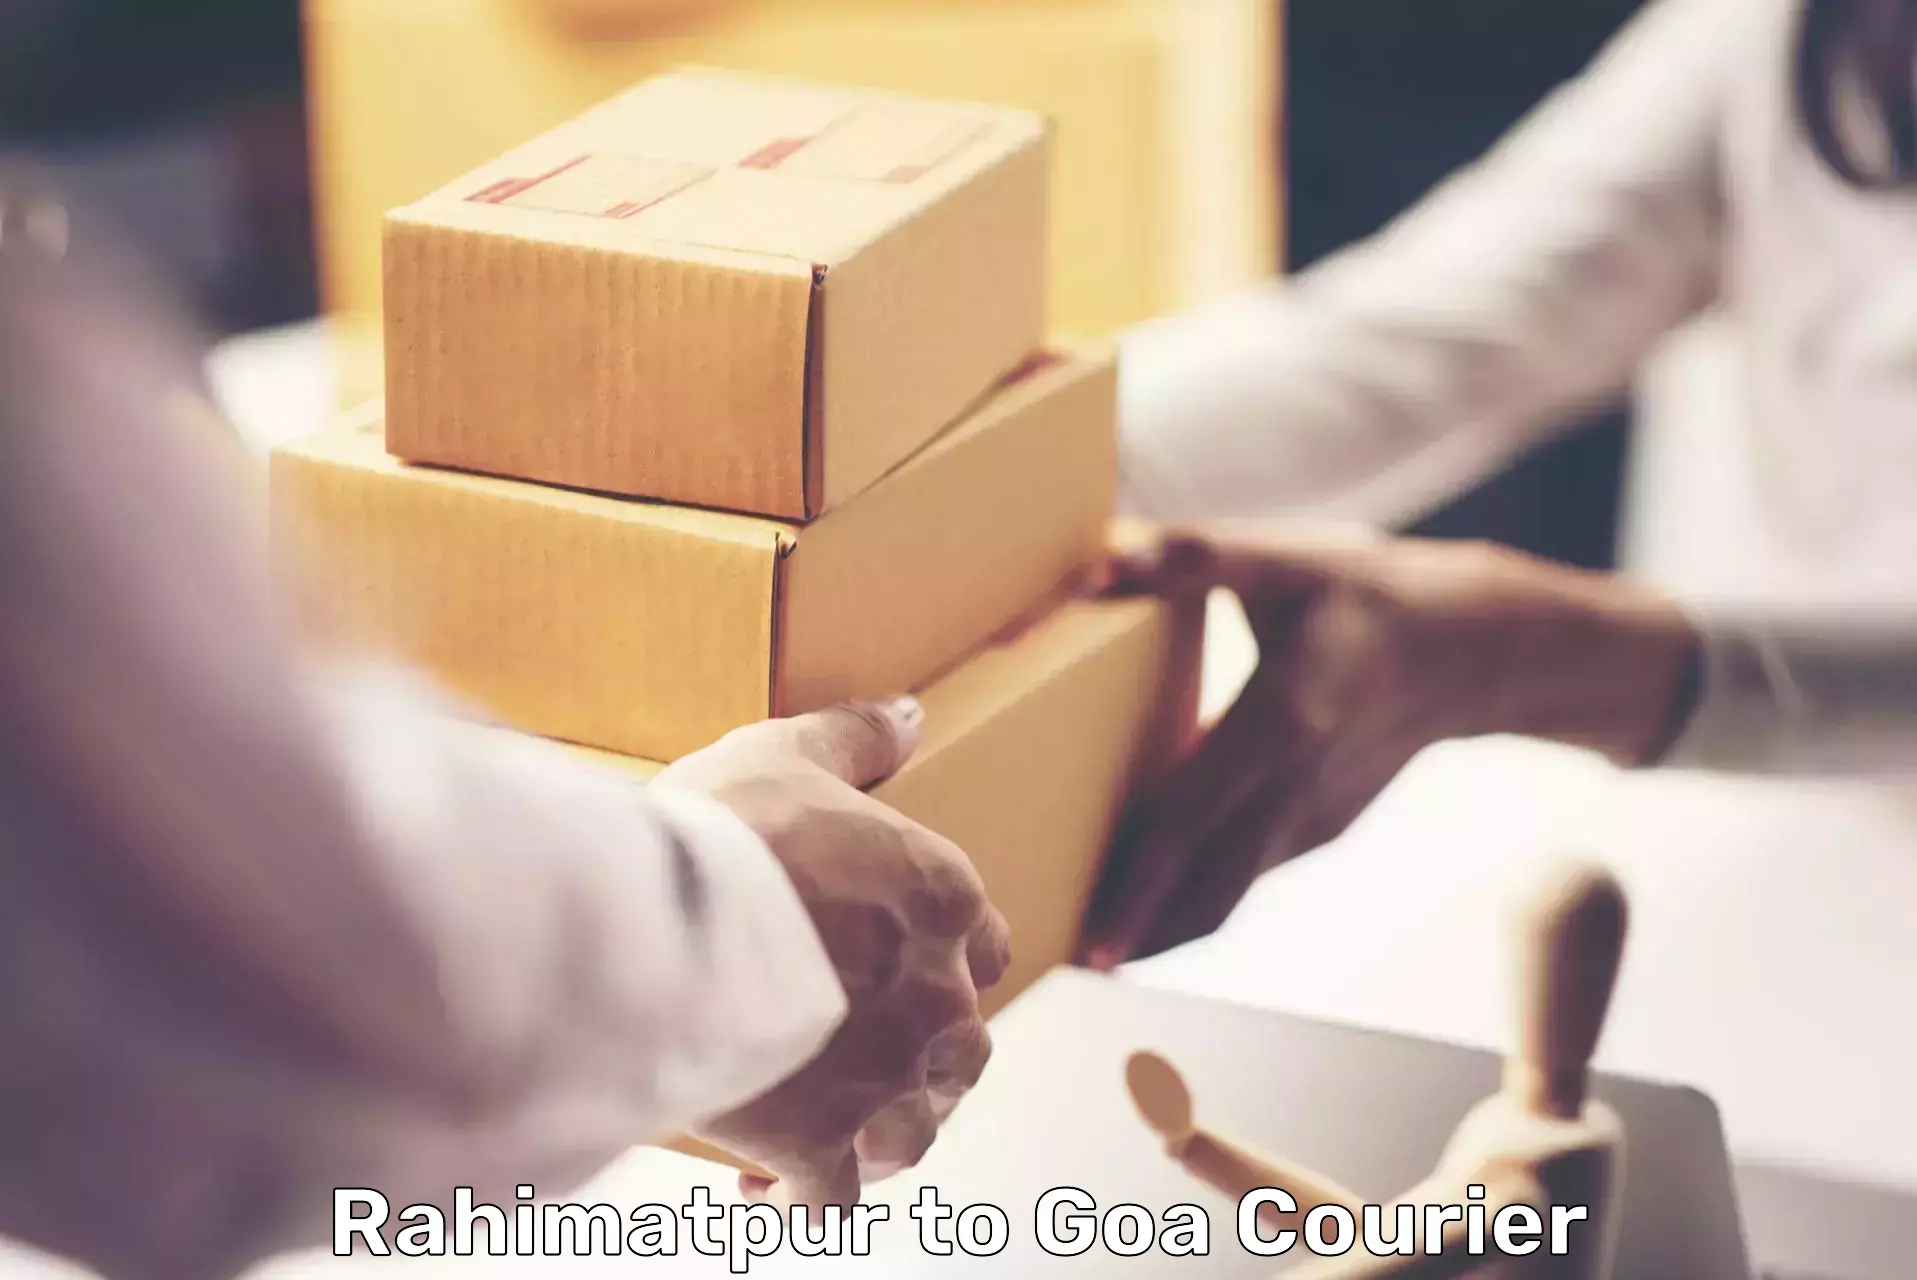 Affordable parcel service Rahimatpur to Vasco da Gama